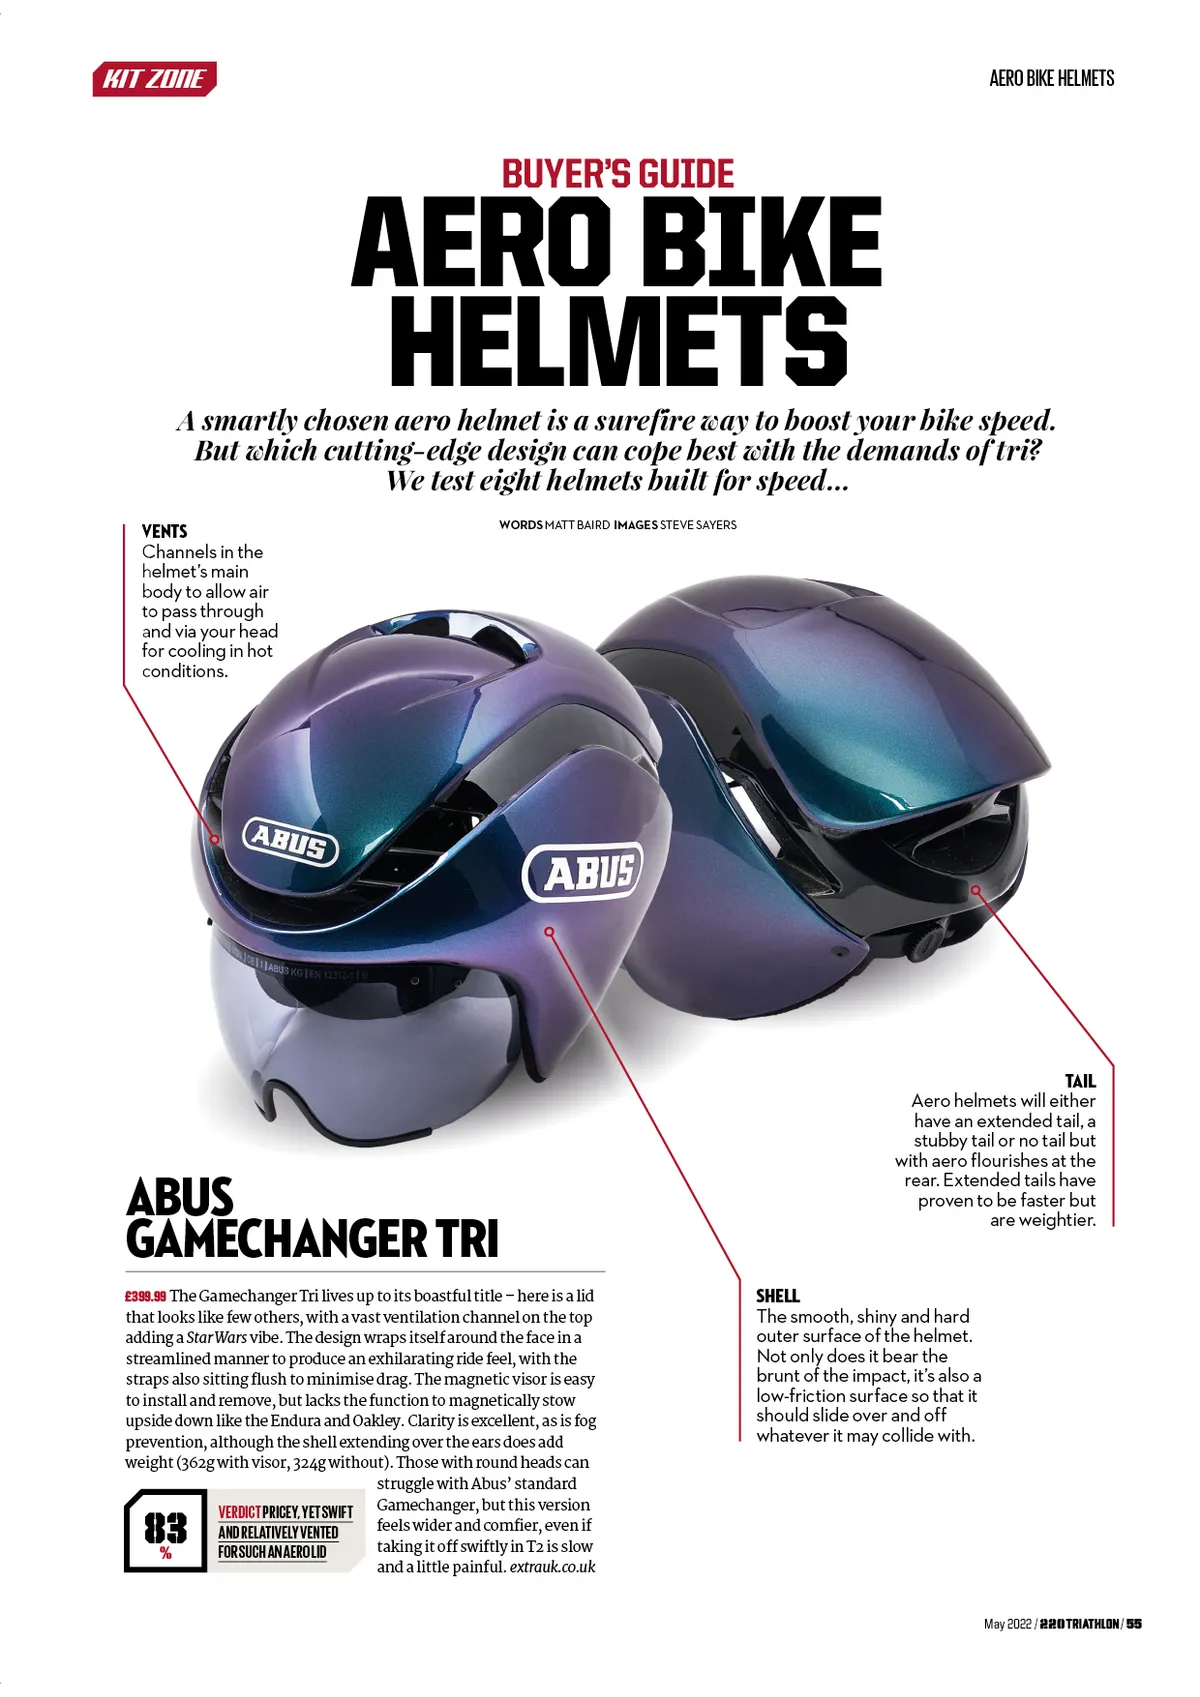 Aero bike helmets review article